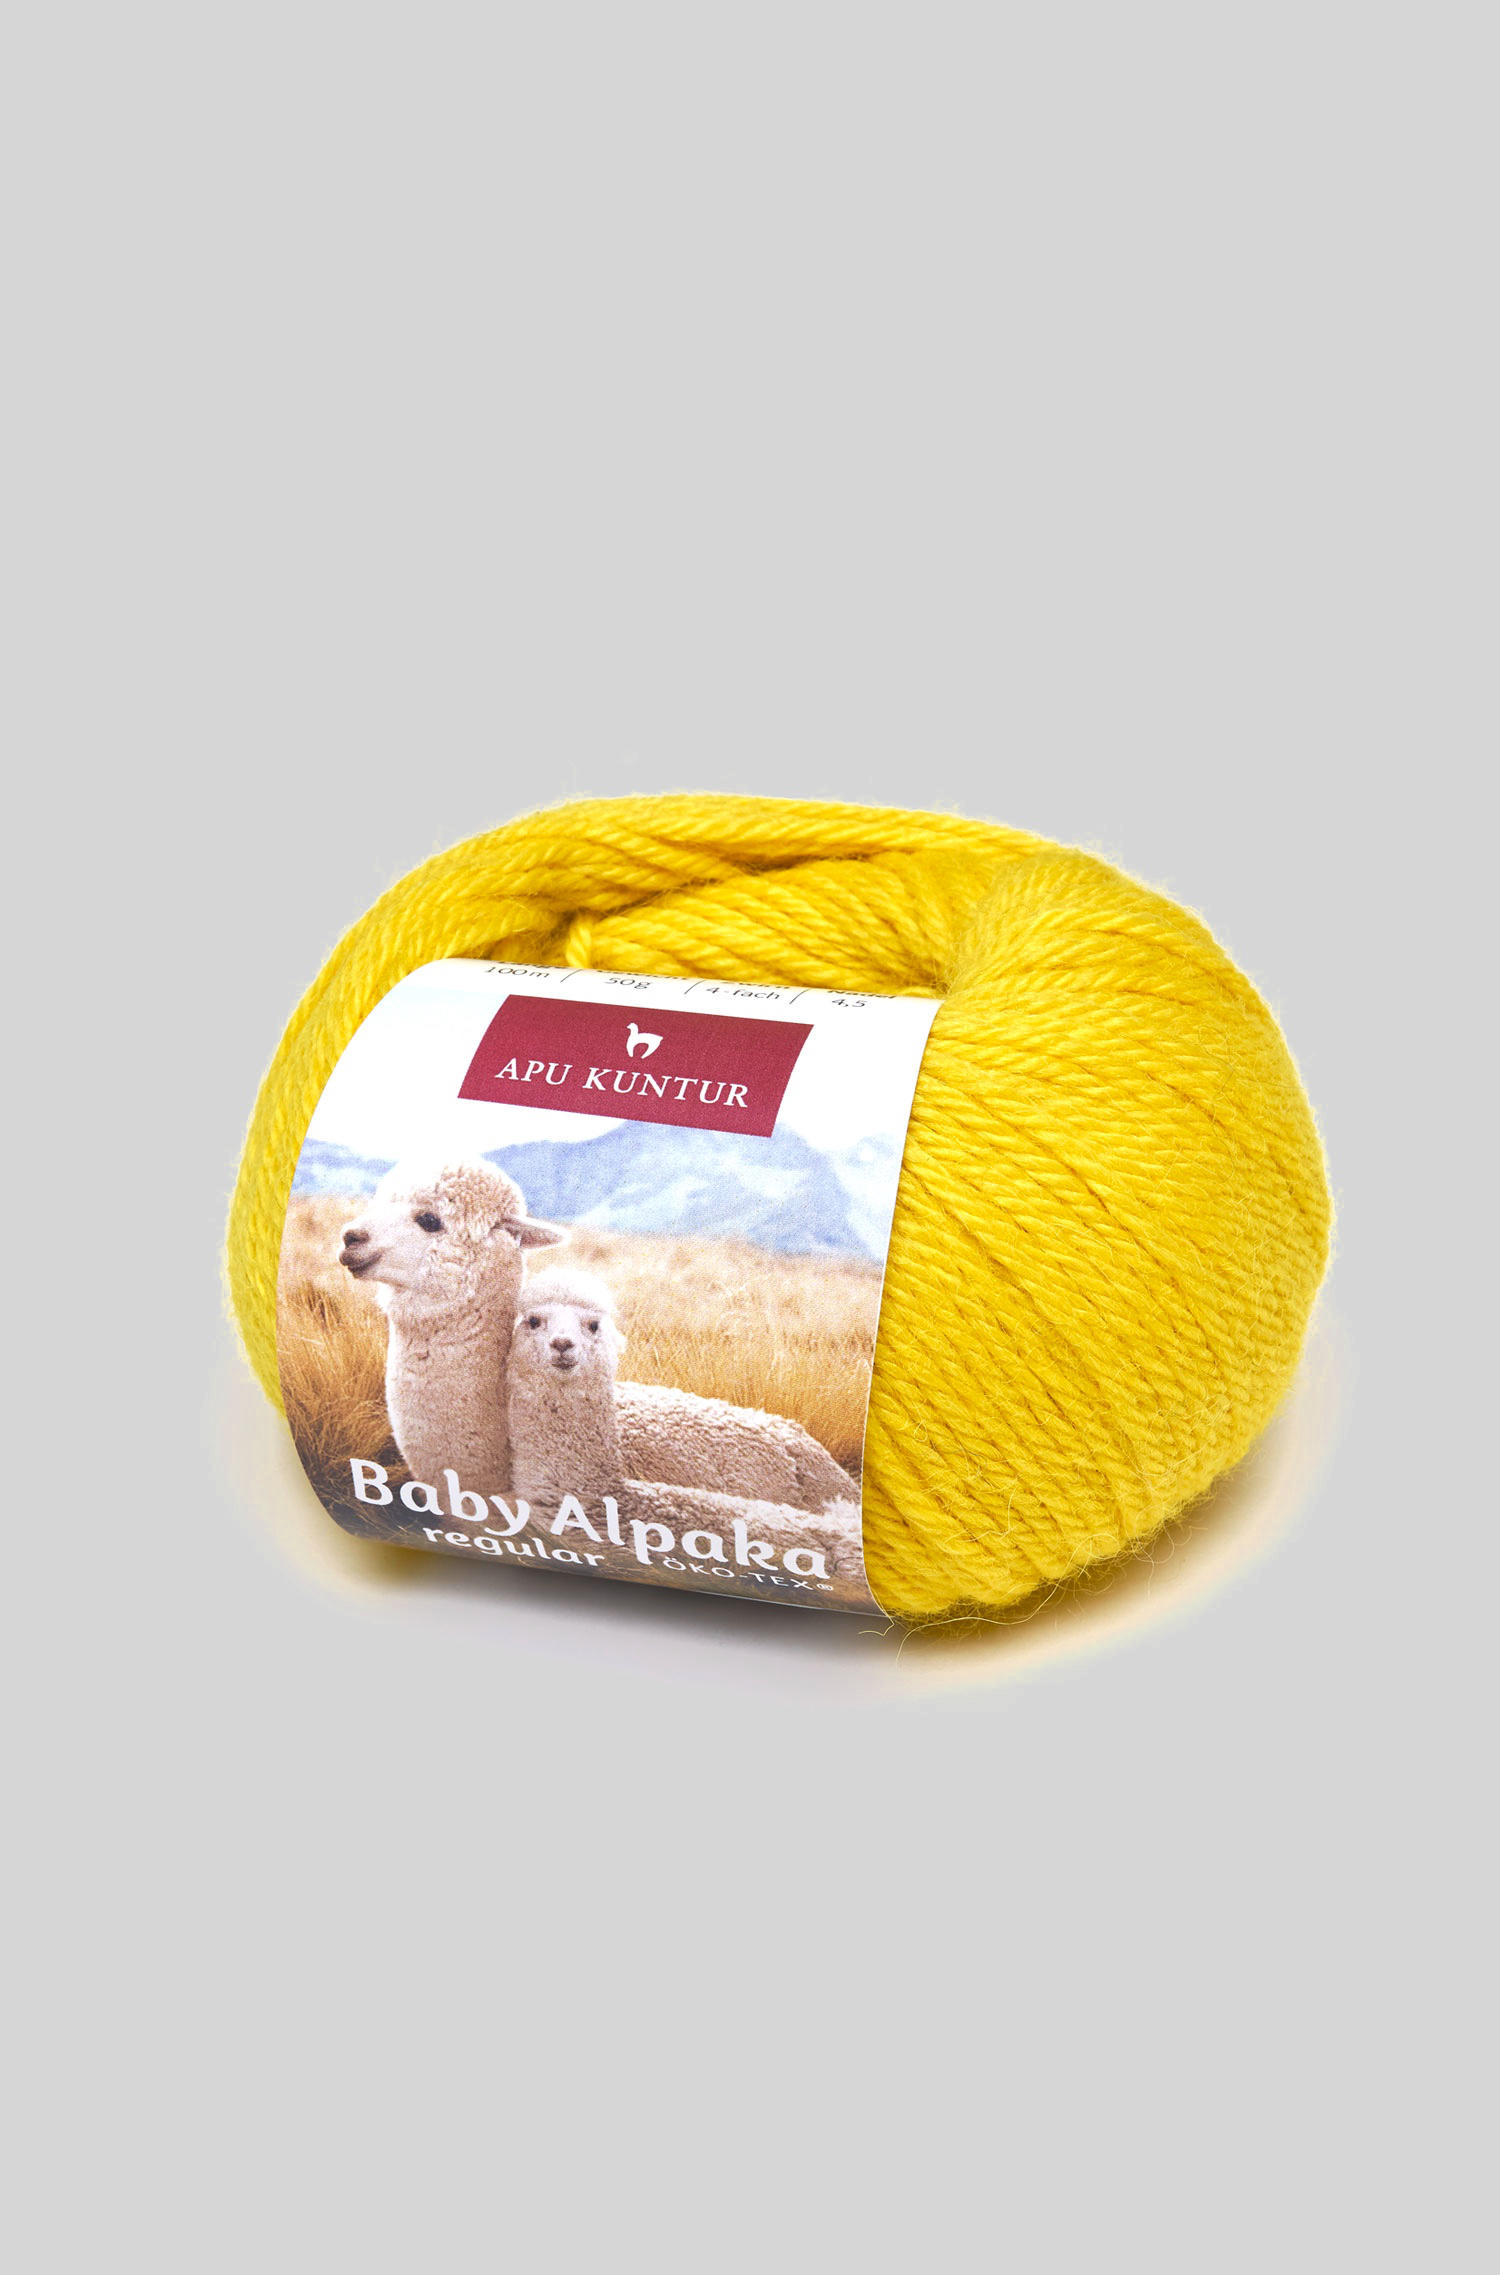 Baby-Alpaka Wolle Regular